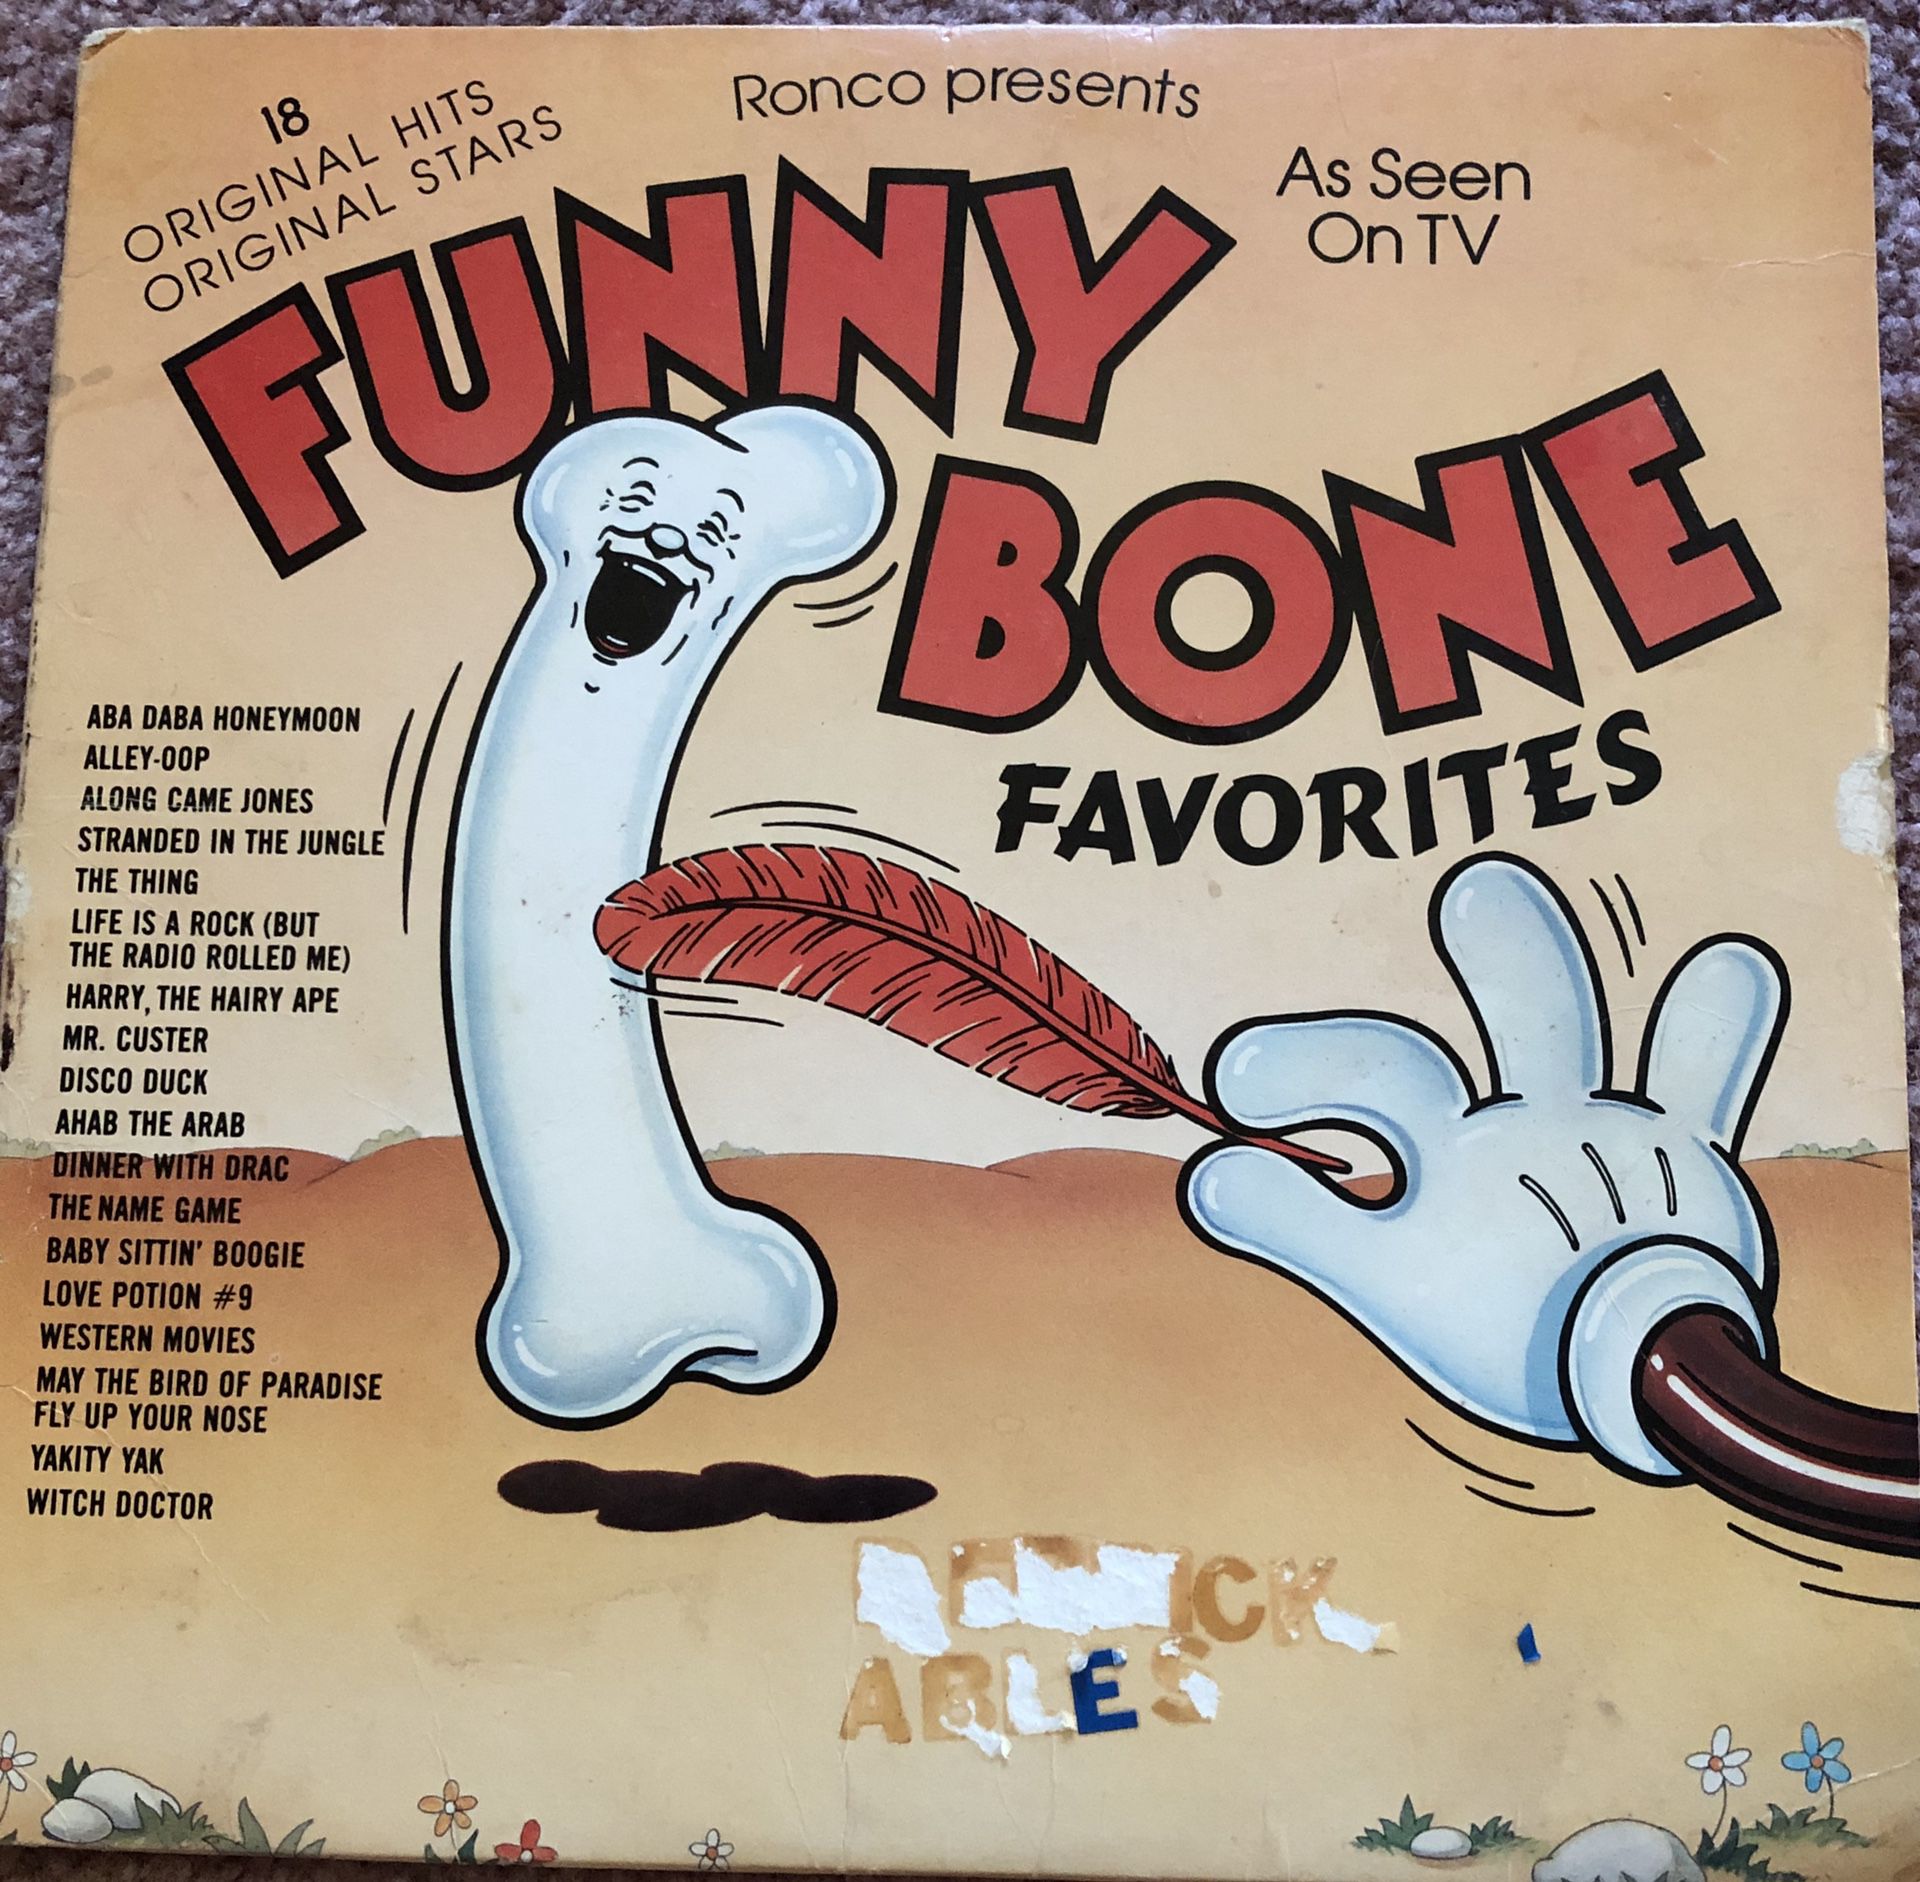 Comedy “Funny Bone Favorites” Vinyl Album $7